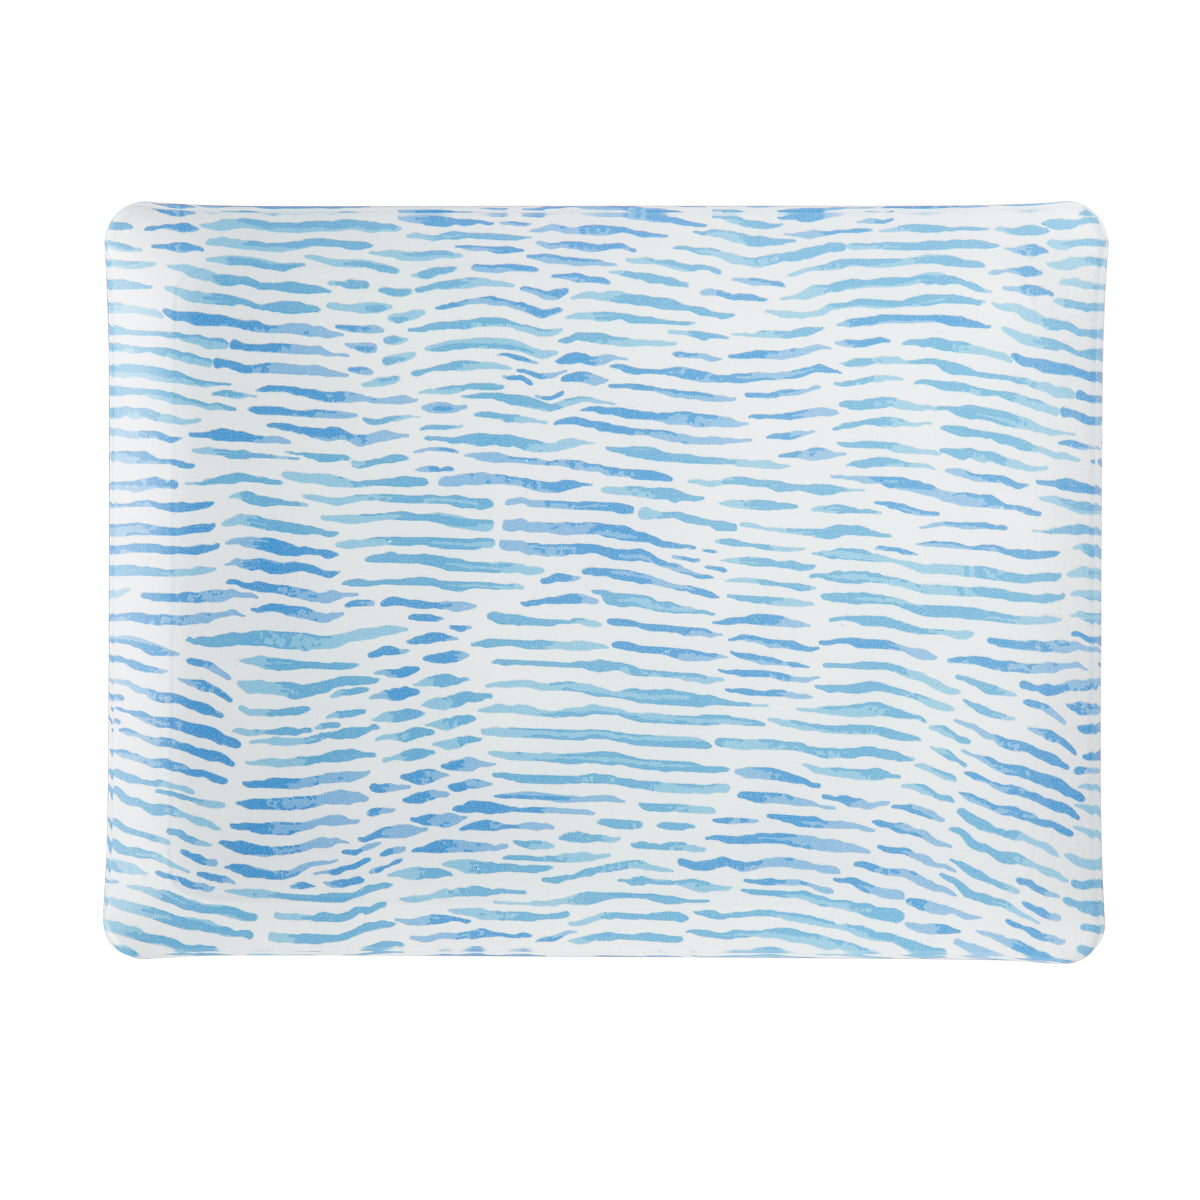 Nina Campbell Fabric Tray Medium - Arles Blue